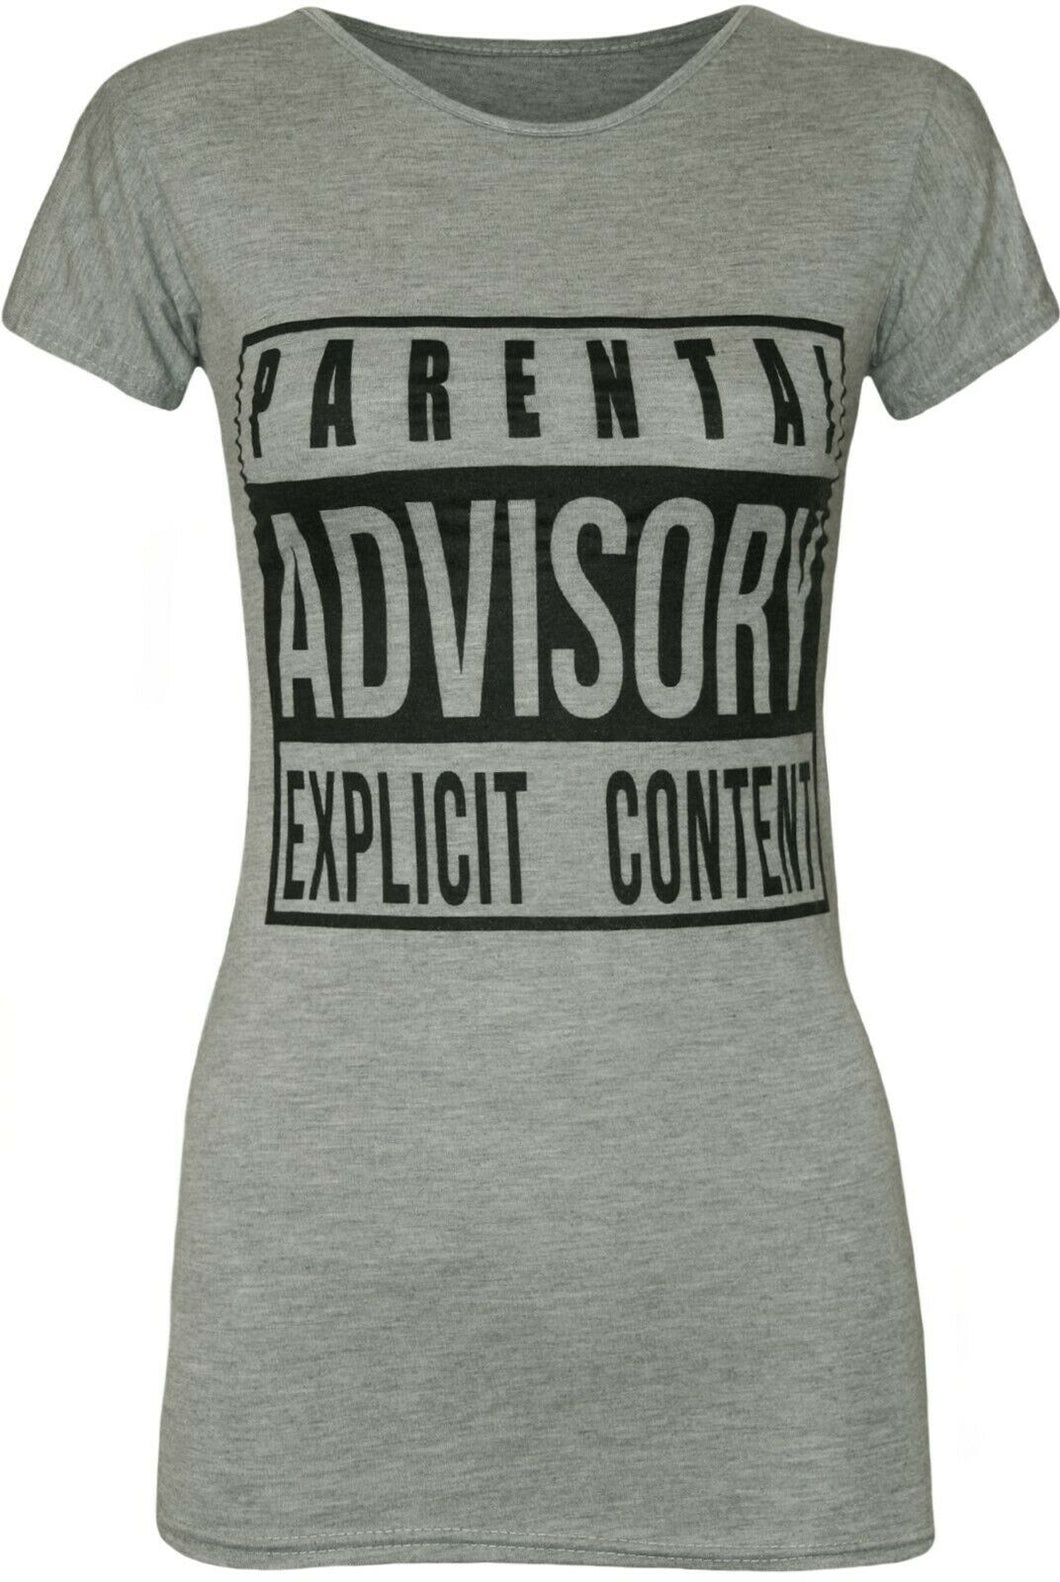 New Women Parent Advisory T Shirt Top, Slim Fit [Grey]